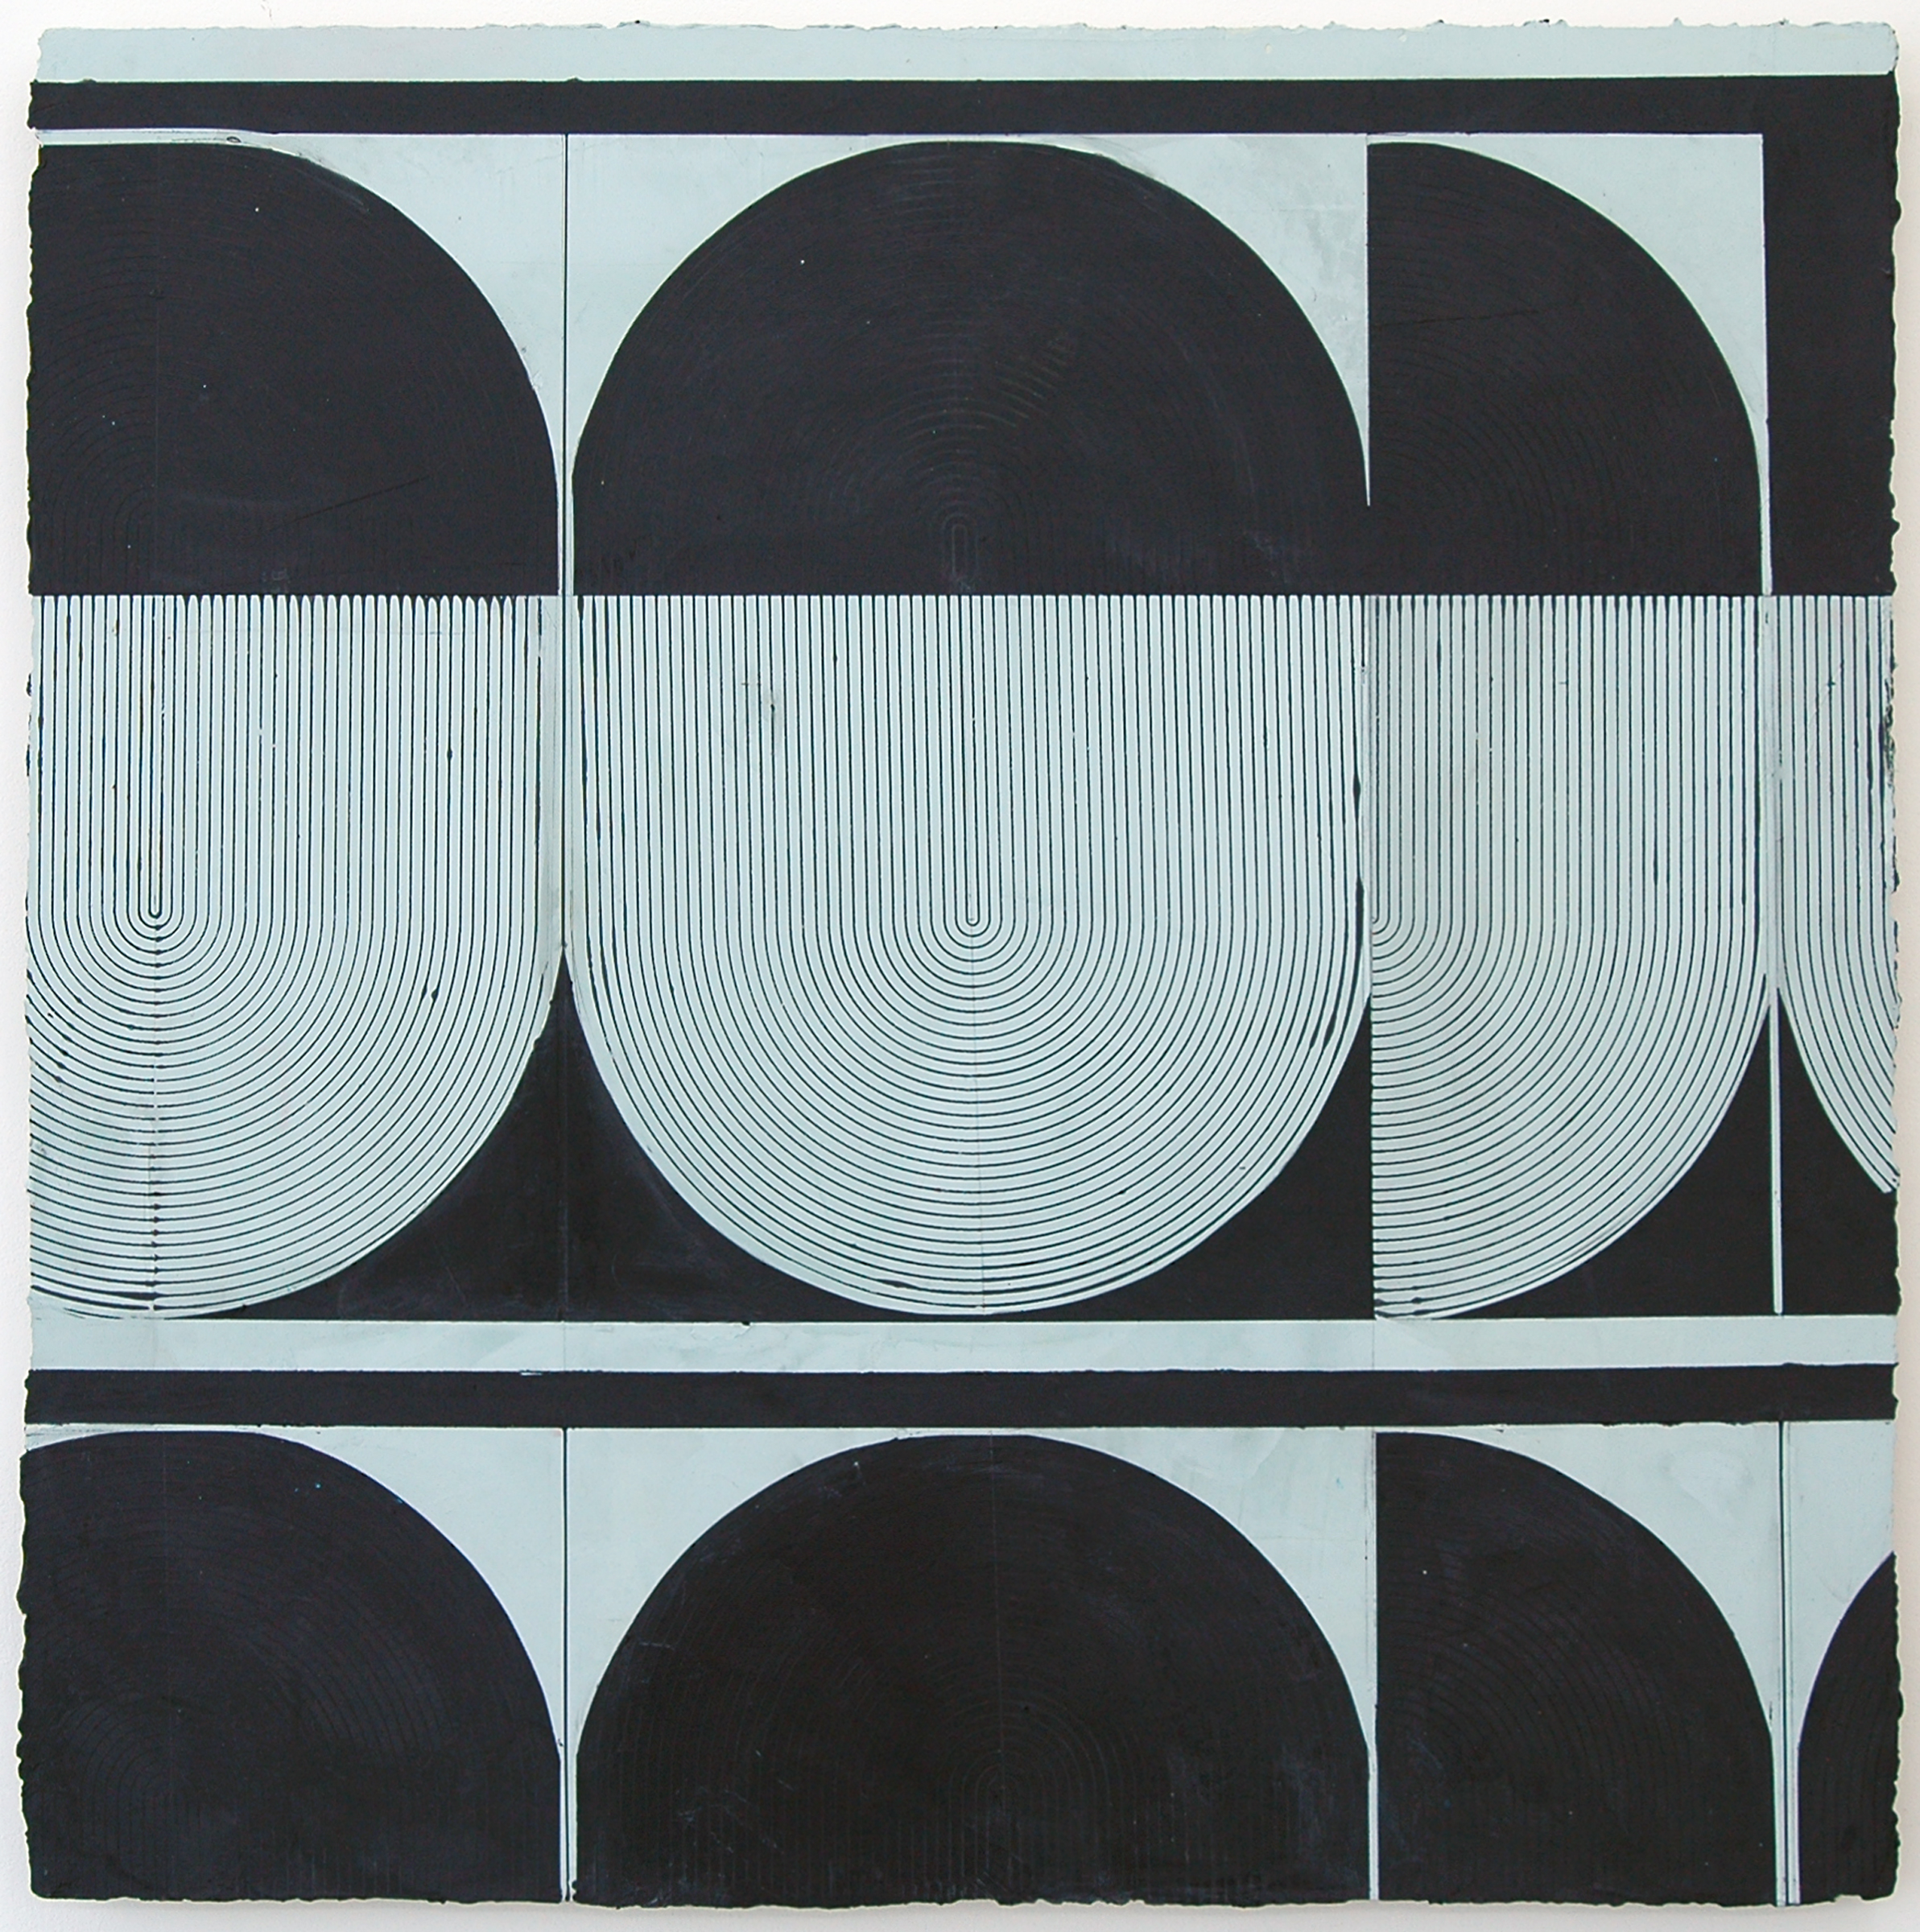   ELISE FERGUSON   Bob O , pigmented plaster on MDF panel, 30" x 30", 2014 